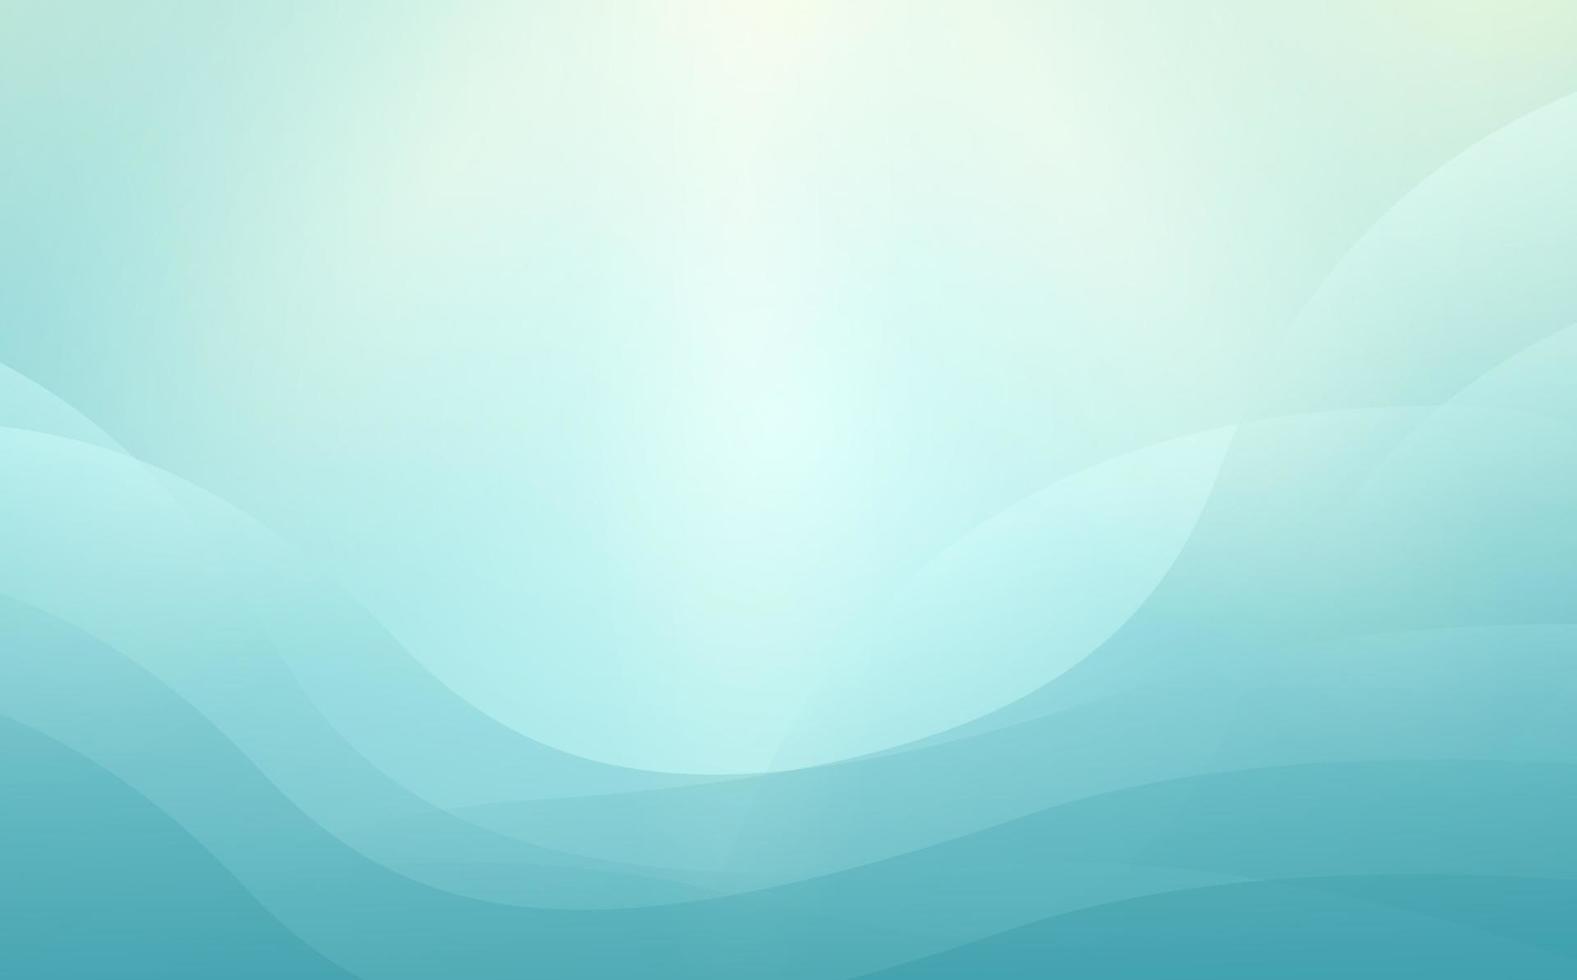 blauw oceaan glimmend abstract achtergrond vector